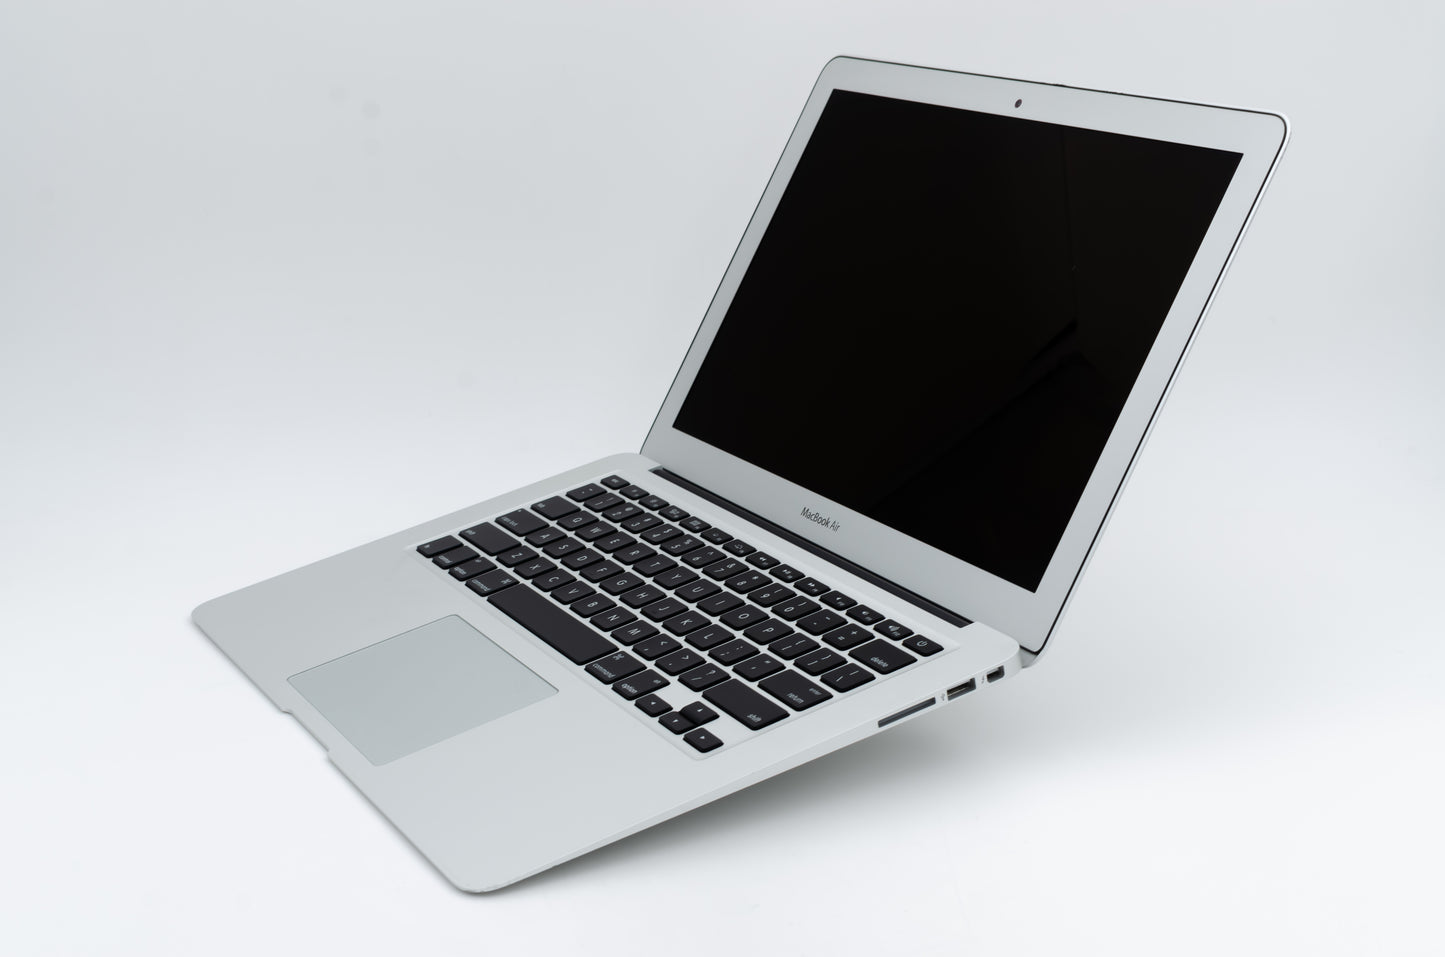 apple-mid-2011-13.3-inch-macbook-air-a1369-aluminum-dci7 - 1.8ghz processor, 4gb ram, hd 3000 - 348mb gpu-mc965ll/a-2